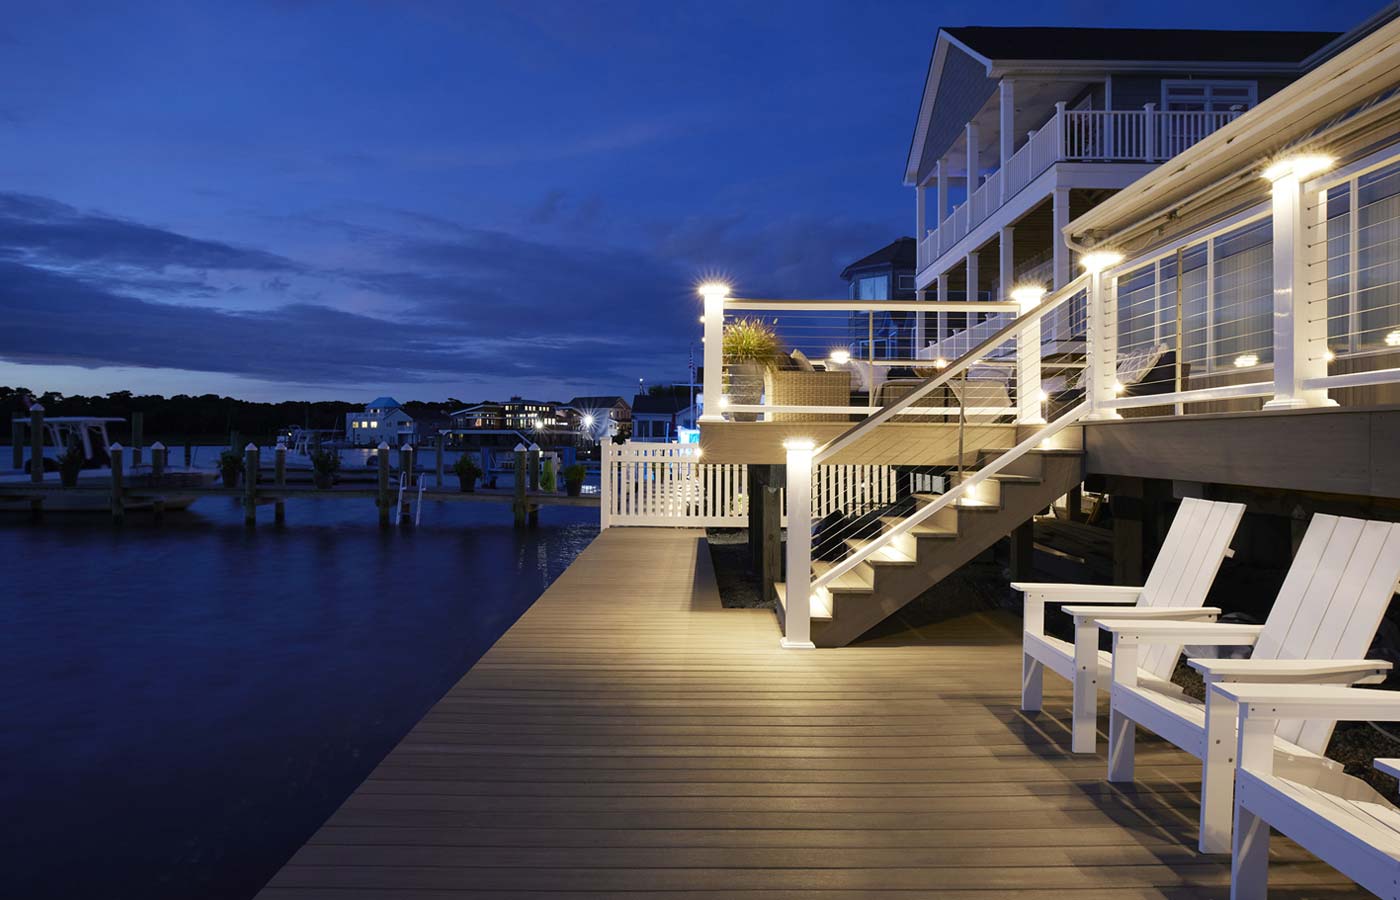 Outdoor Deck Railing Lighting, Outdoor Deck Railing Lighting Ideas to Illuminate Your Outdoor Space